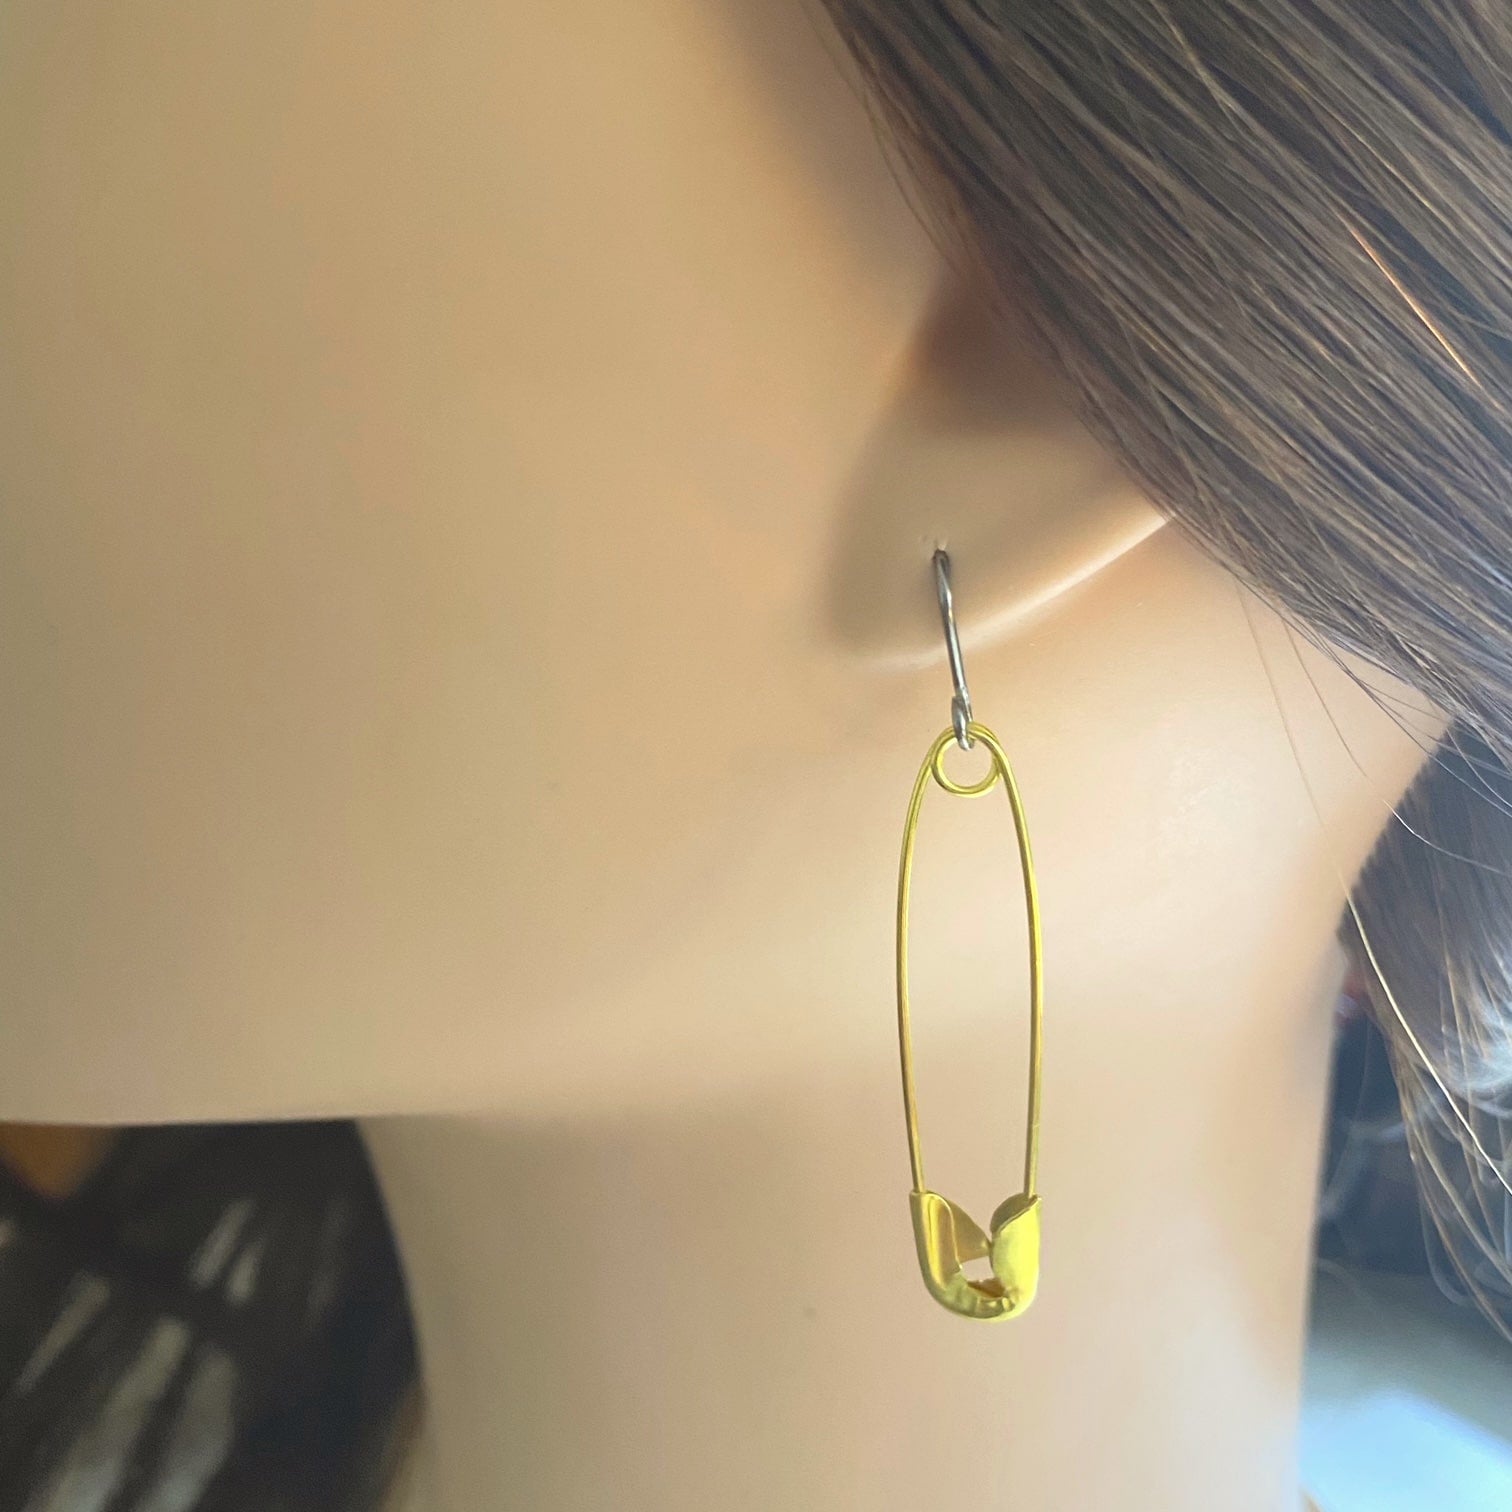 SafetyPin earrings